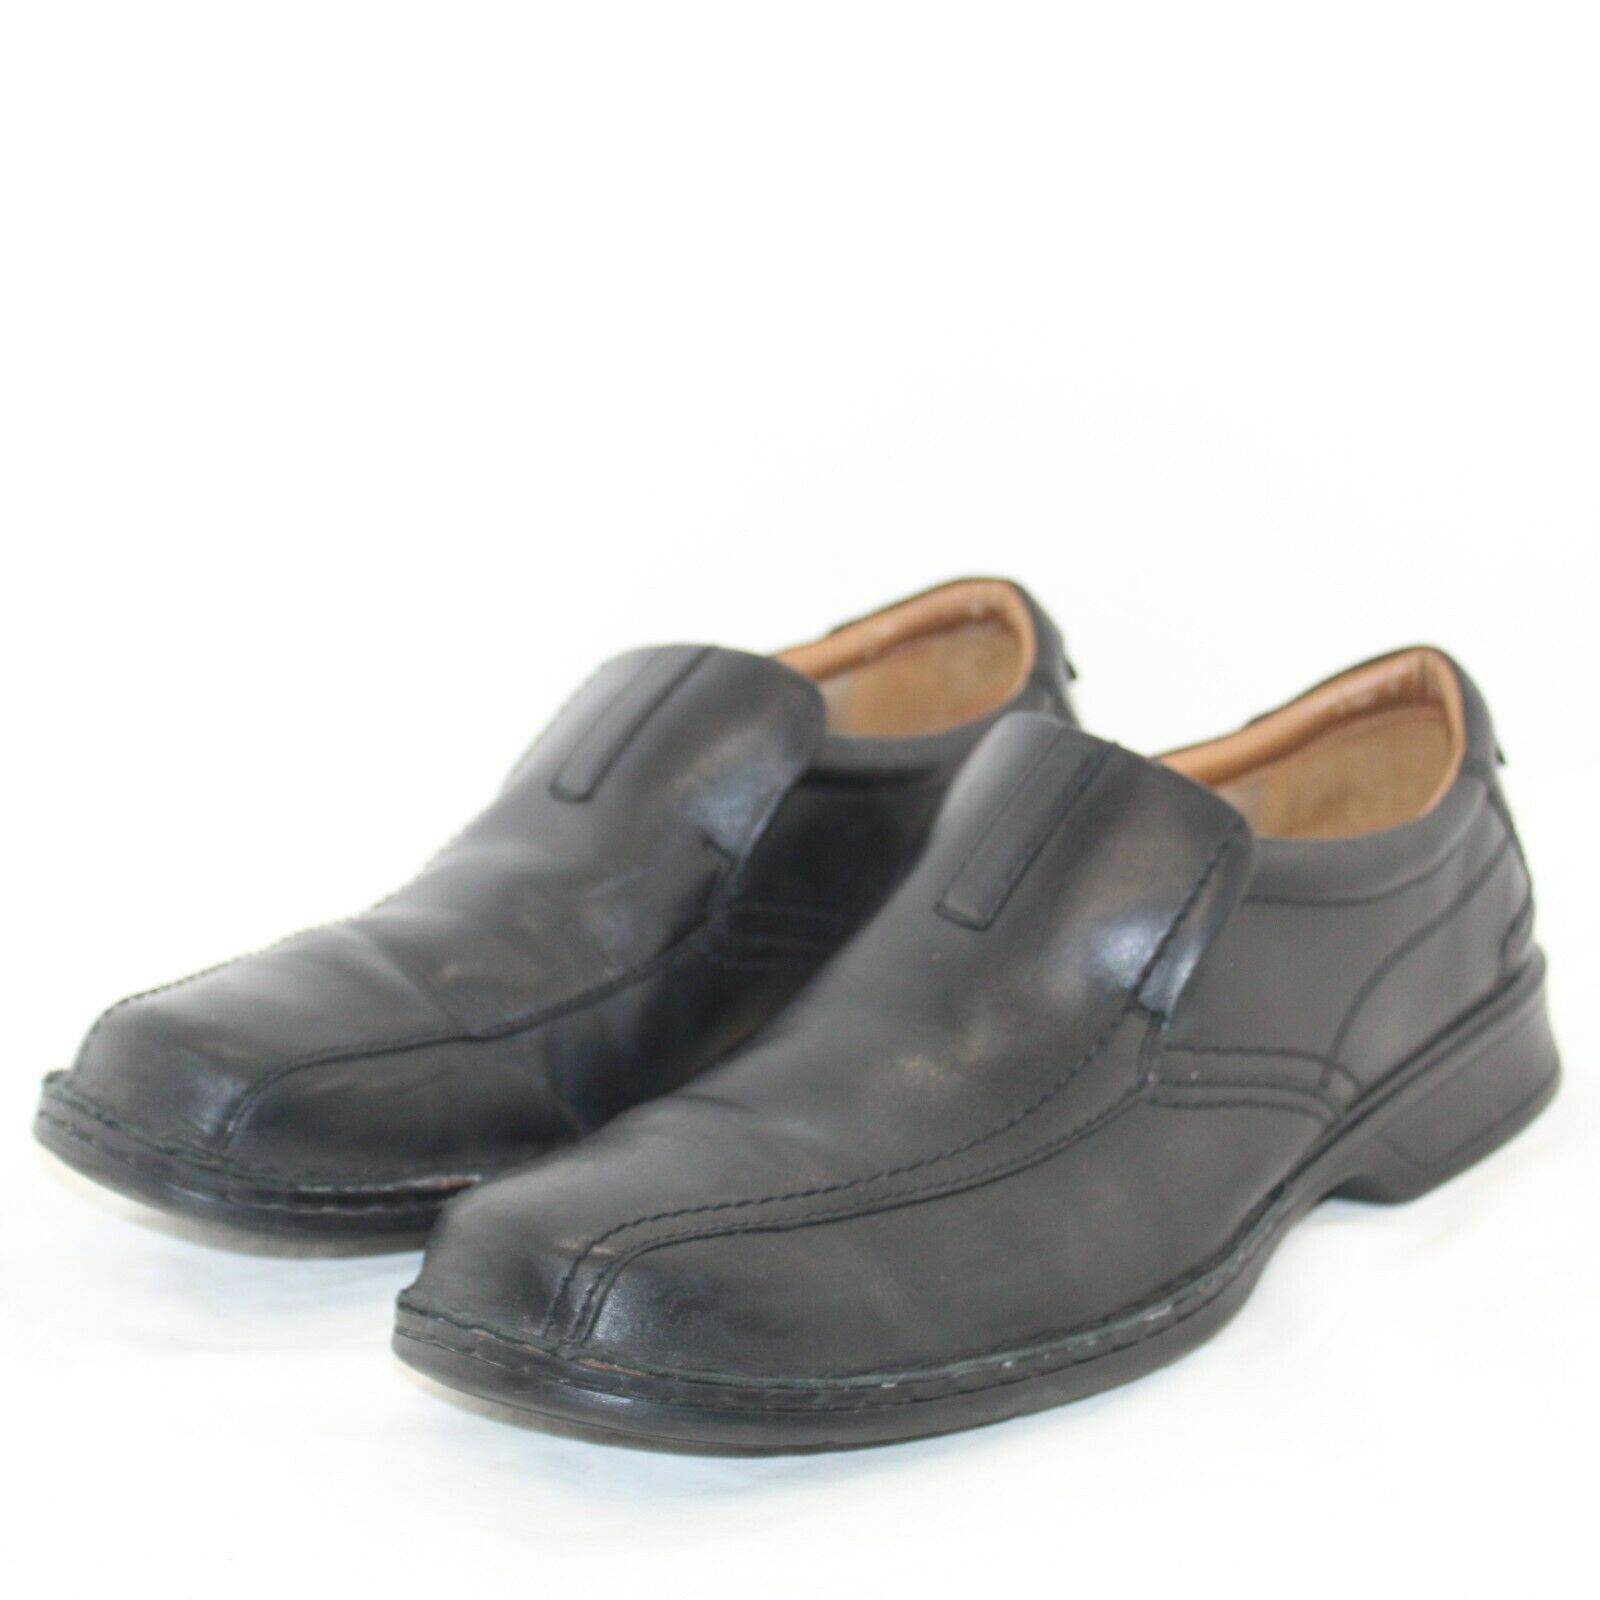 CLARKS COLLECTION men's Loafer dress shoes size 13 M black leather upper slip on